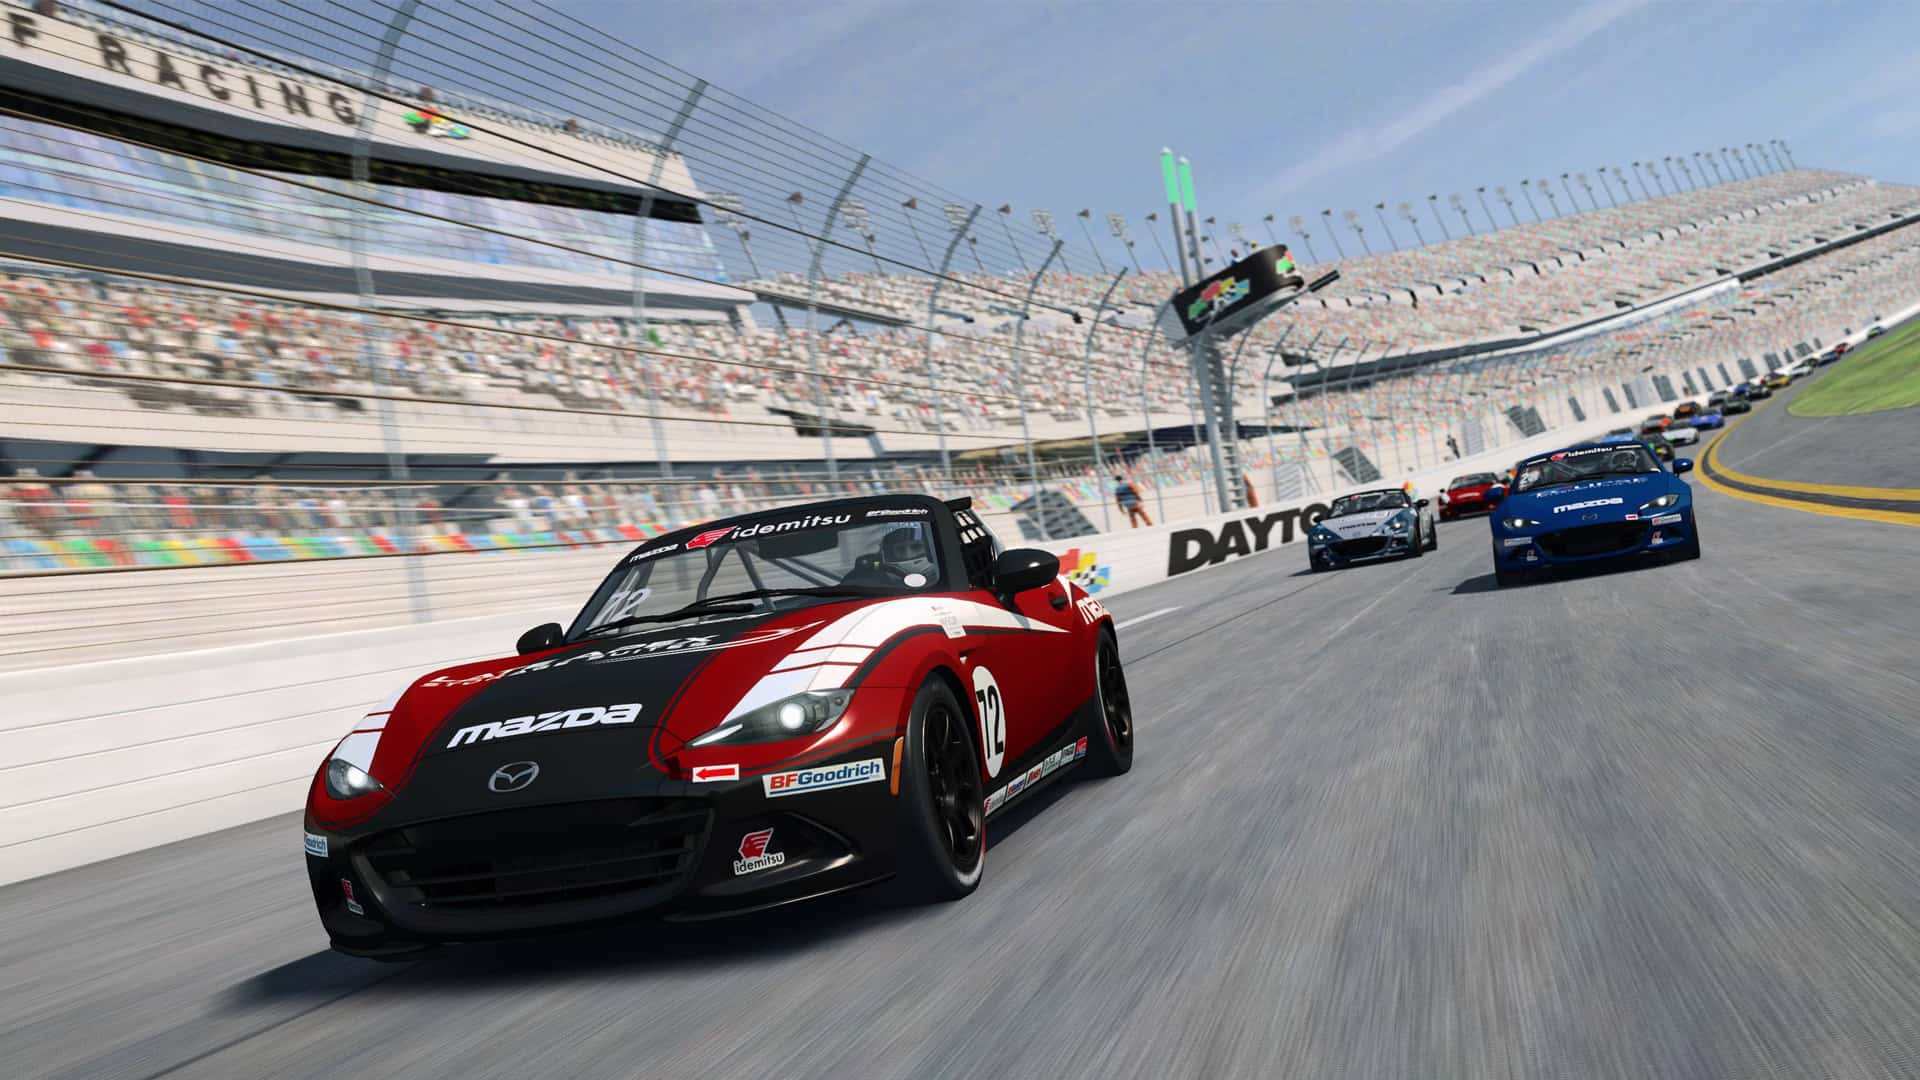 Date revealed for RaceRoom Drivers Pack DLC alongside MX-5 closer look